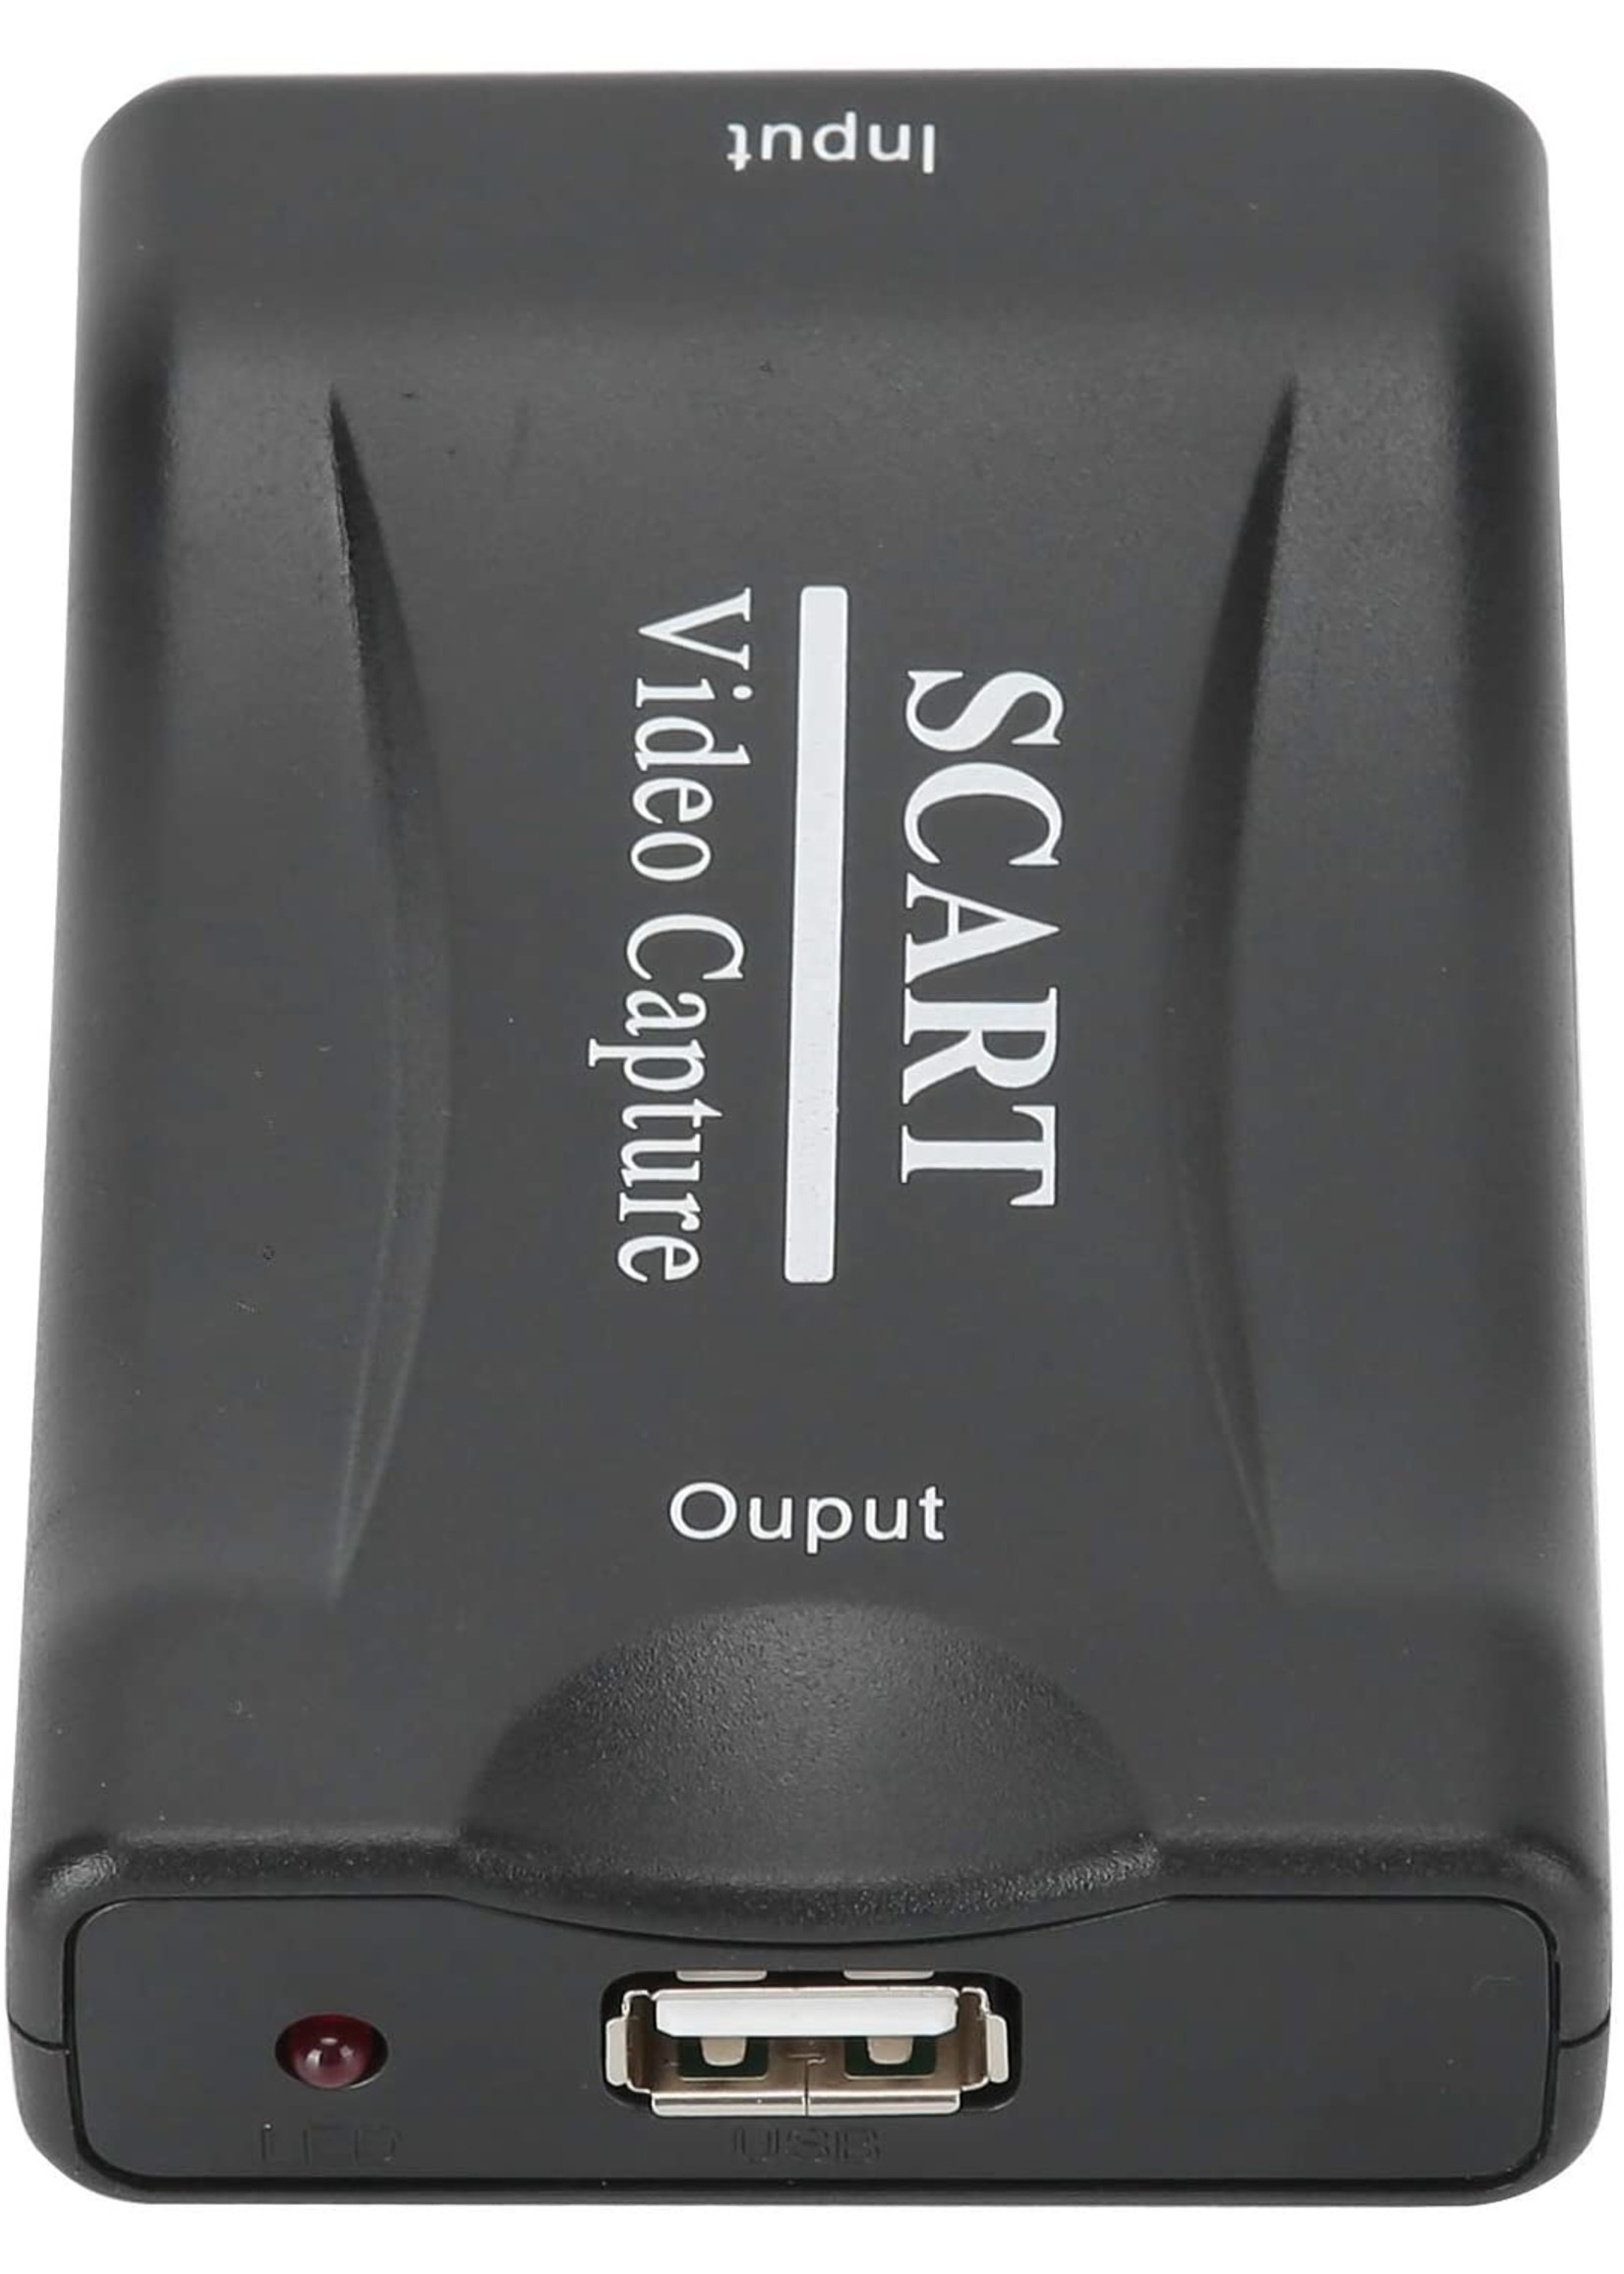 Dolphix SCART to USB video capture adapter